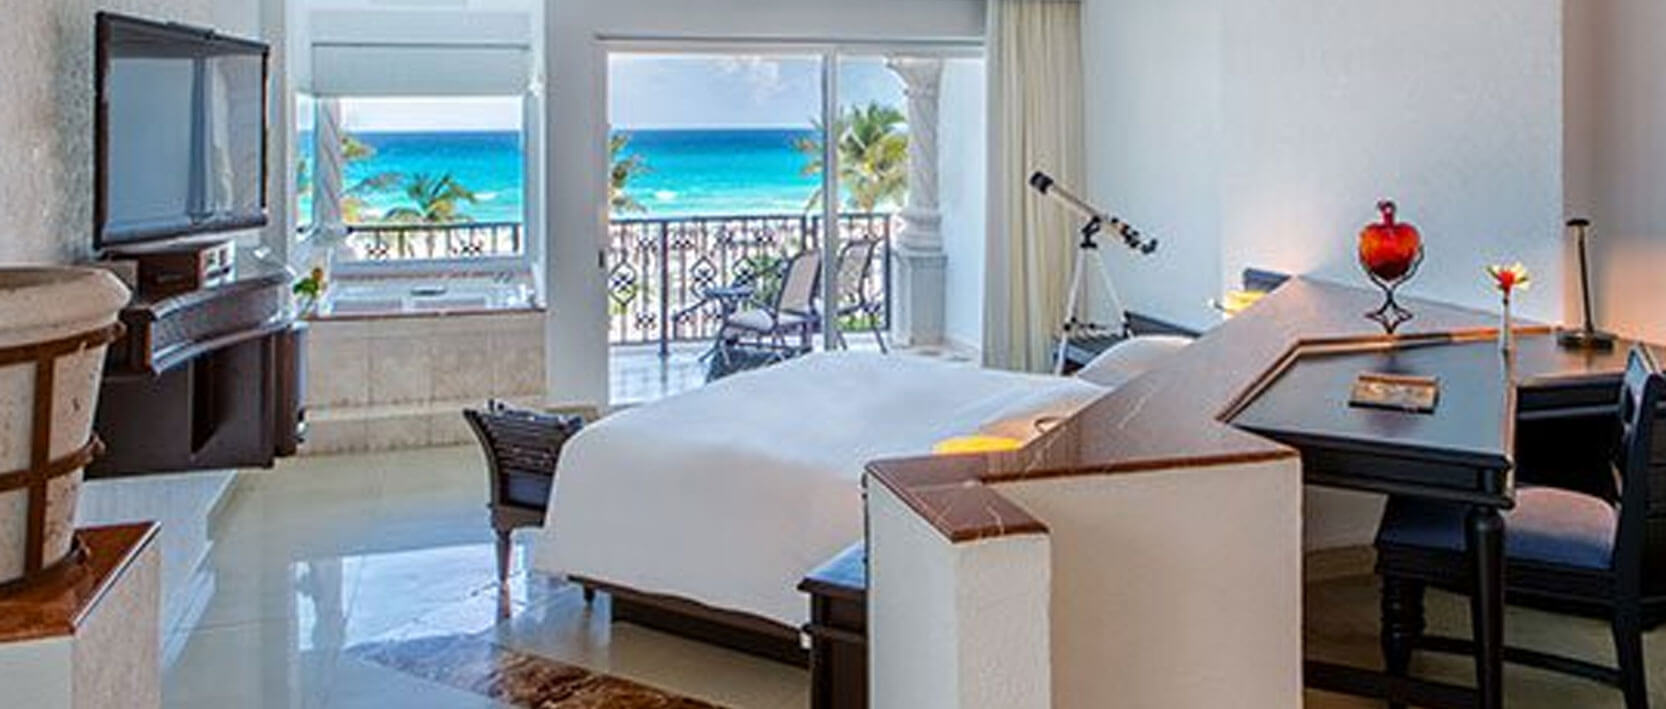 Hyatt Zilara Cancun Accommodations - Ocean View Swim Up Suite King